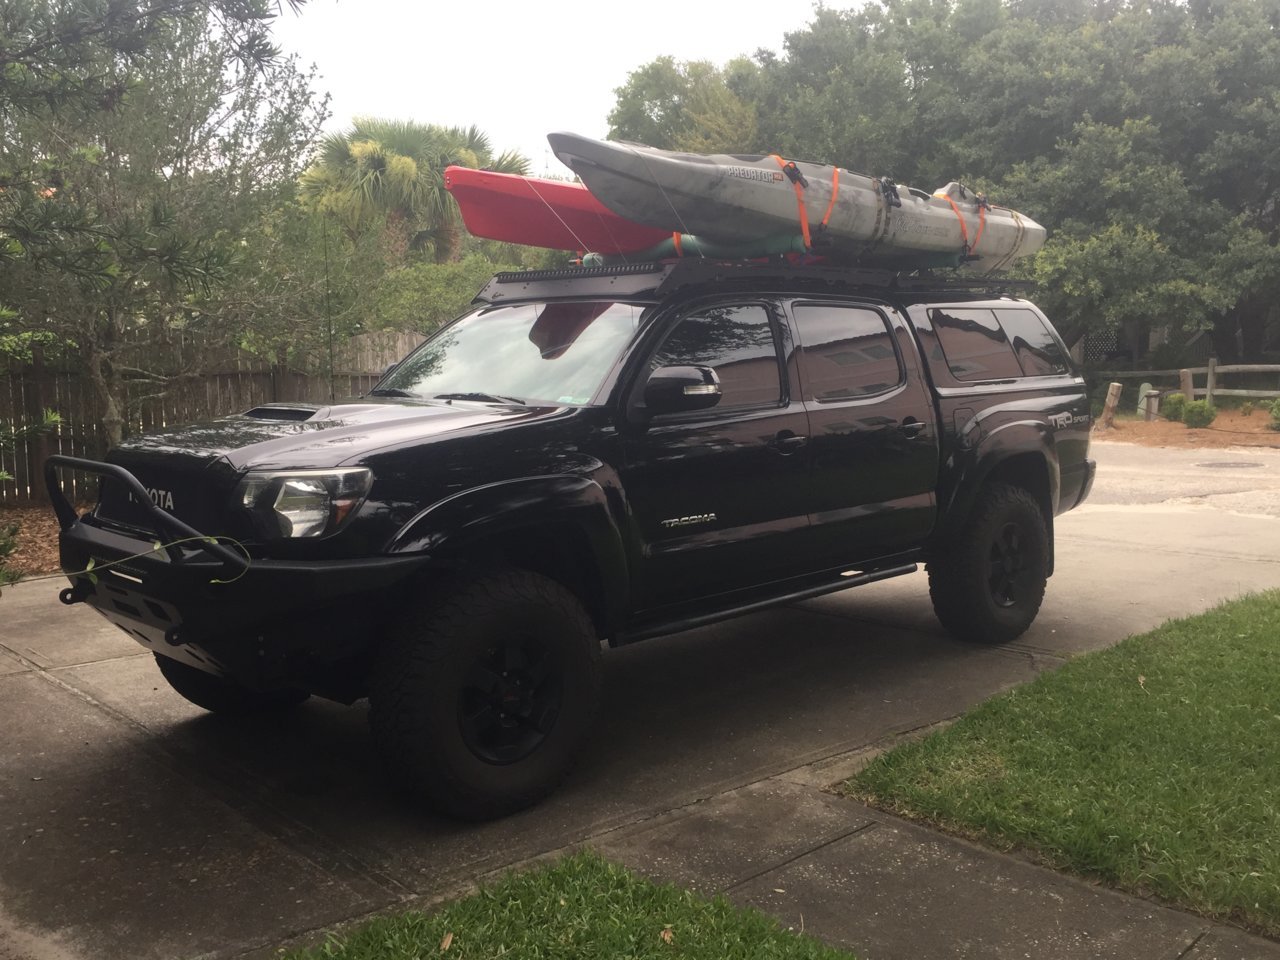 Roof rack for kayaks, snowboards, rod holders